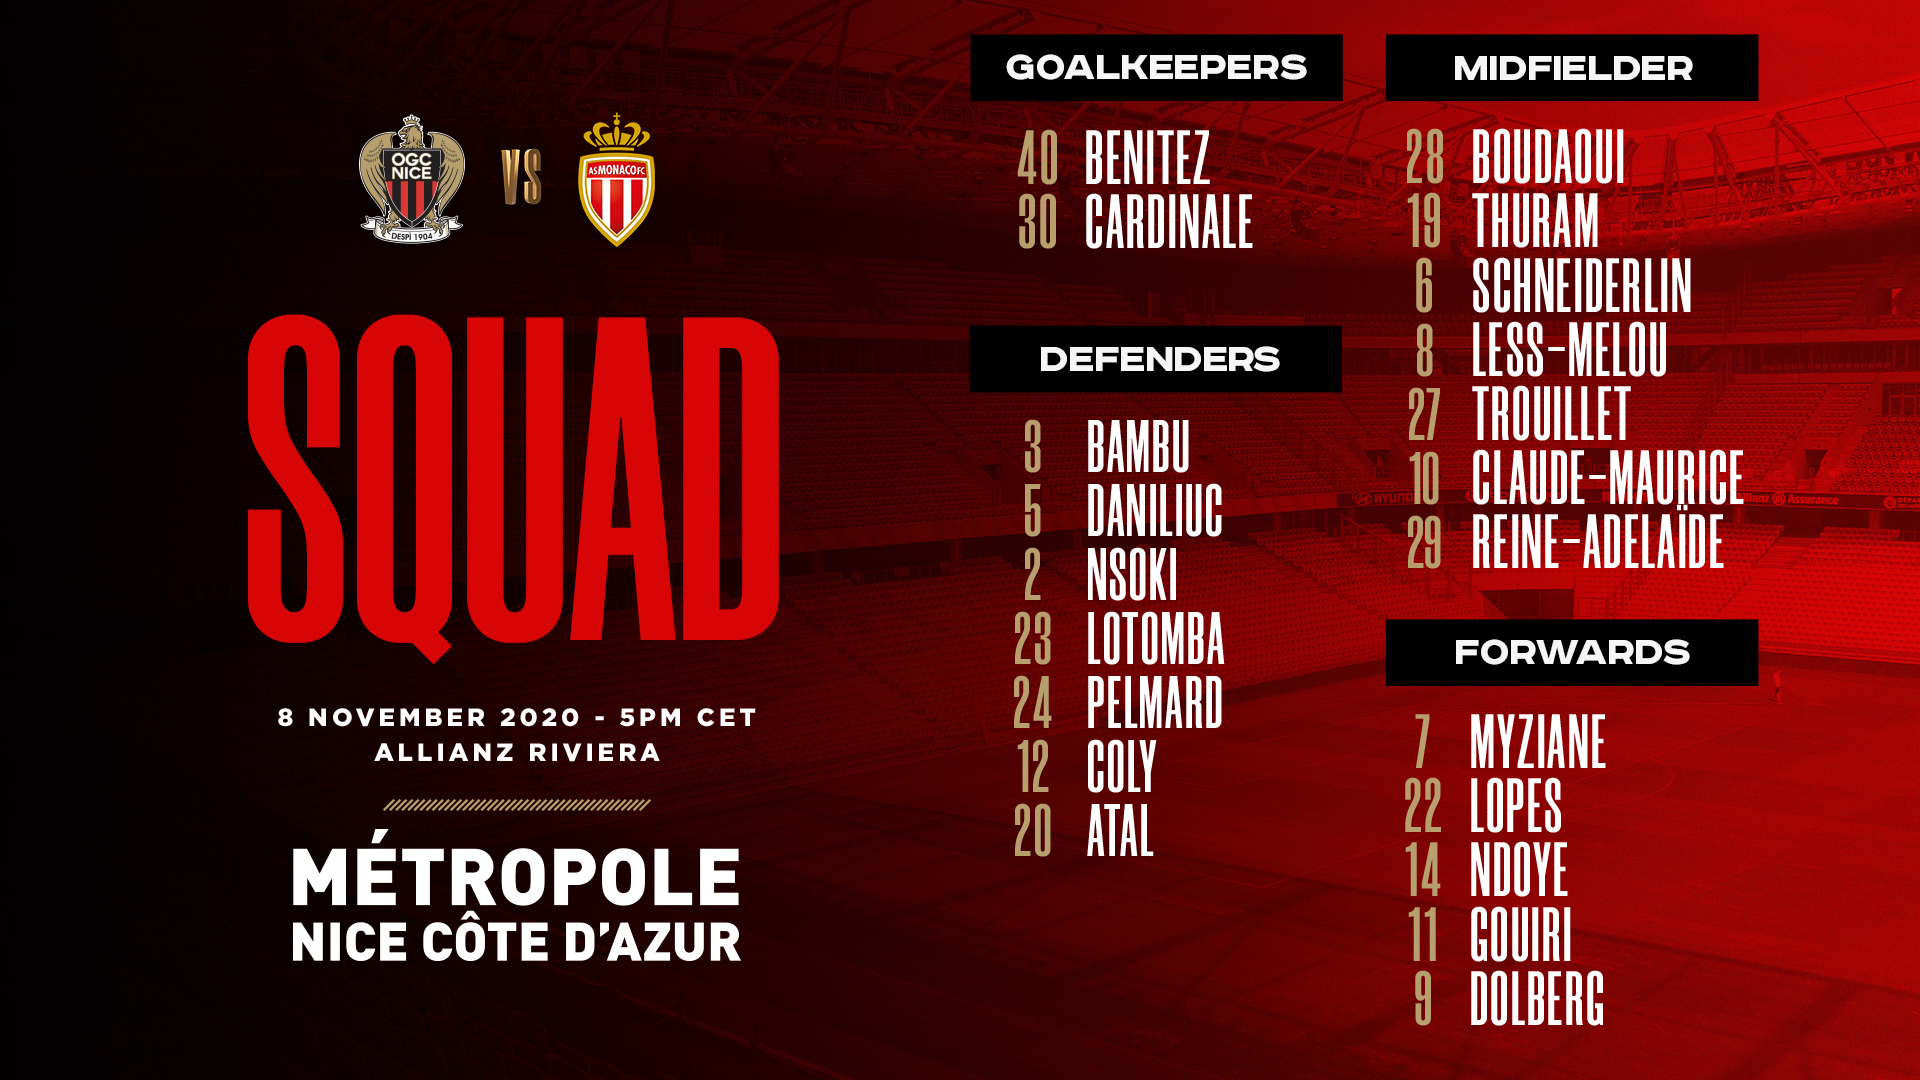 The 21-man squad to face Monaco | Squad